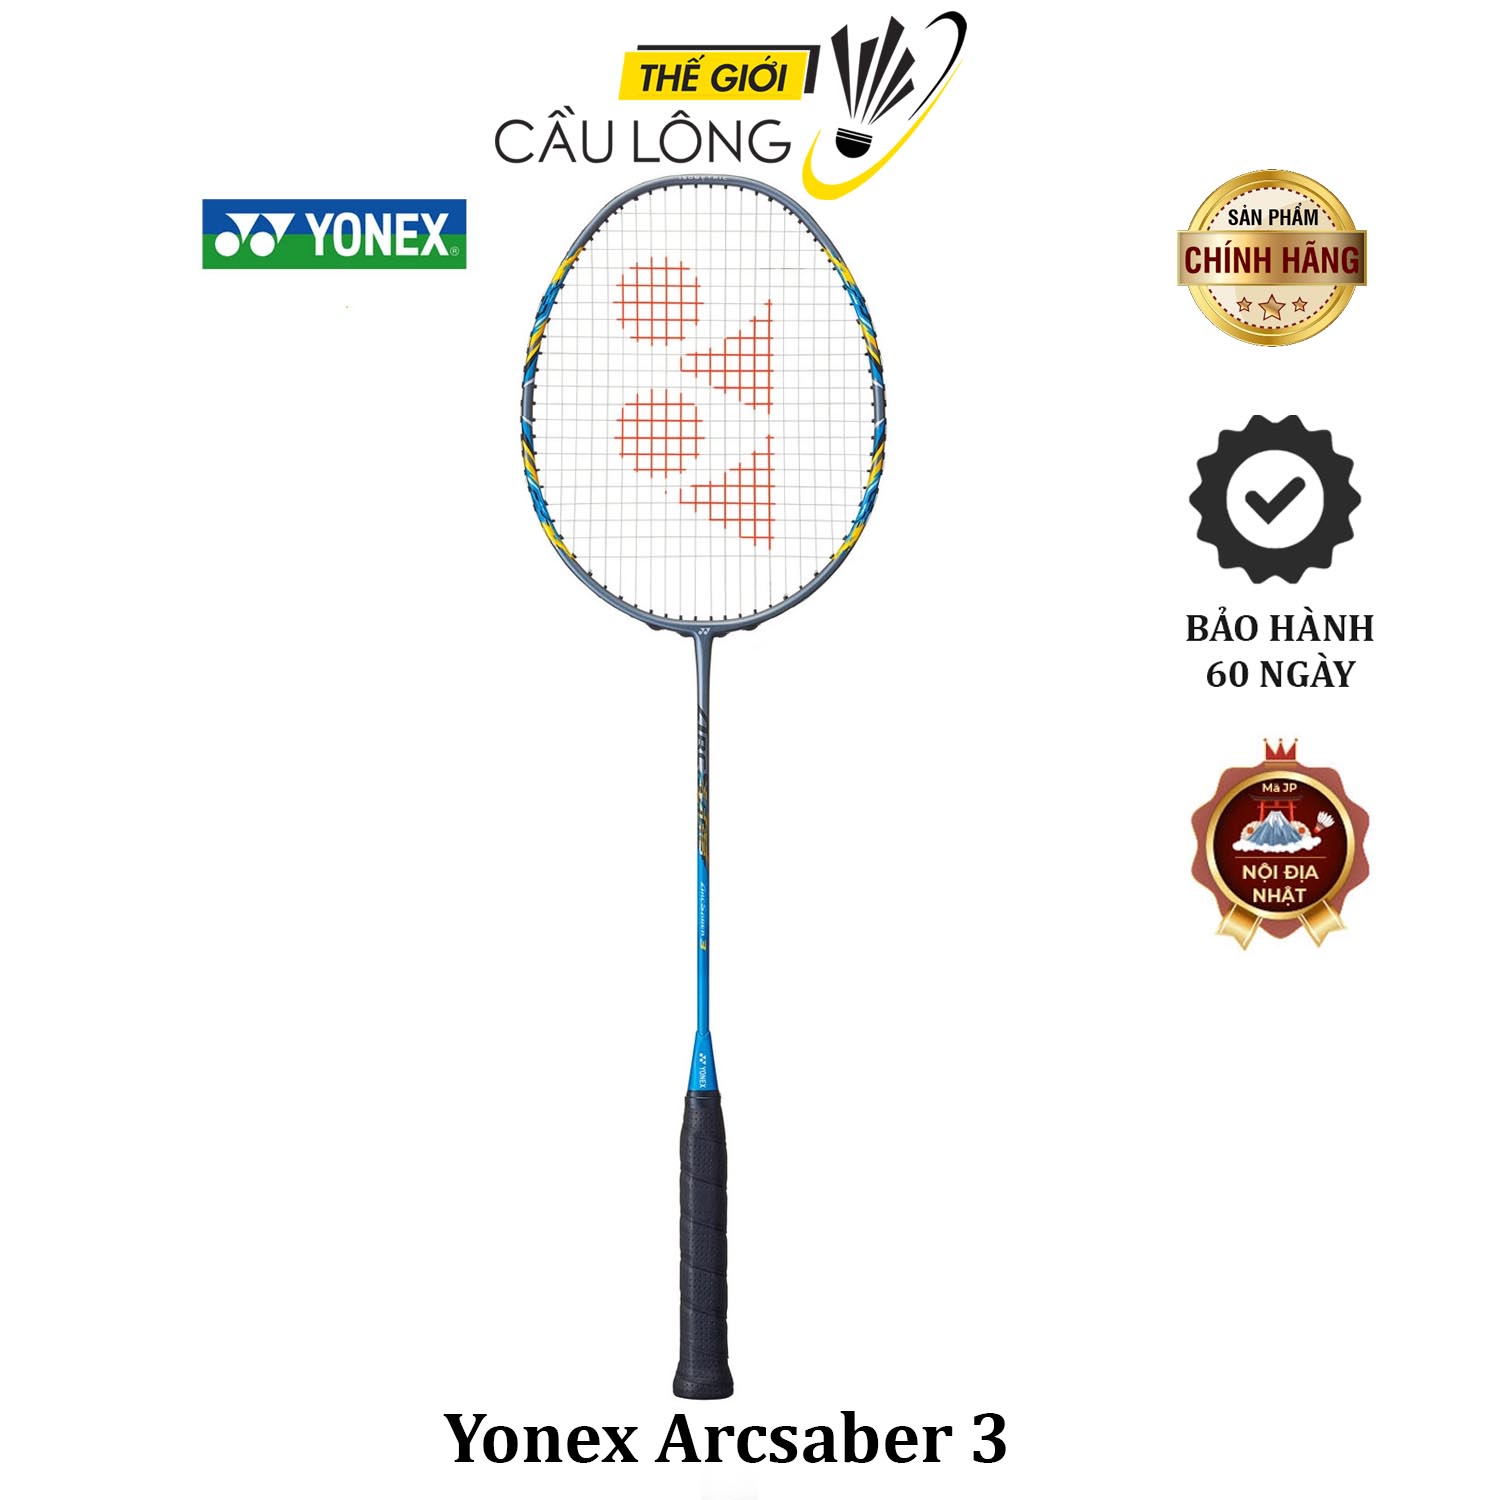 yonex arcsaber 3